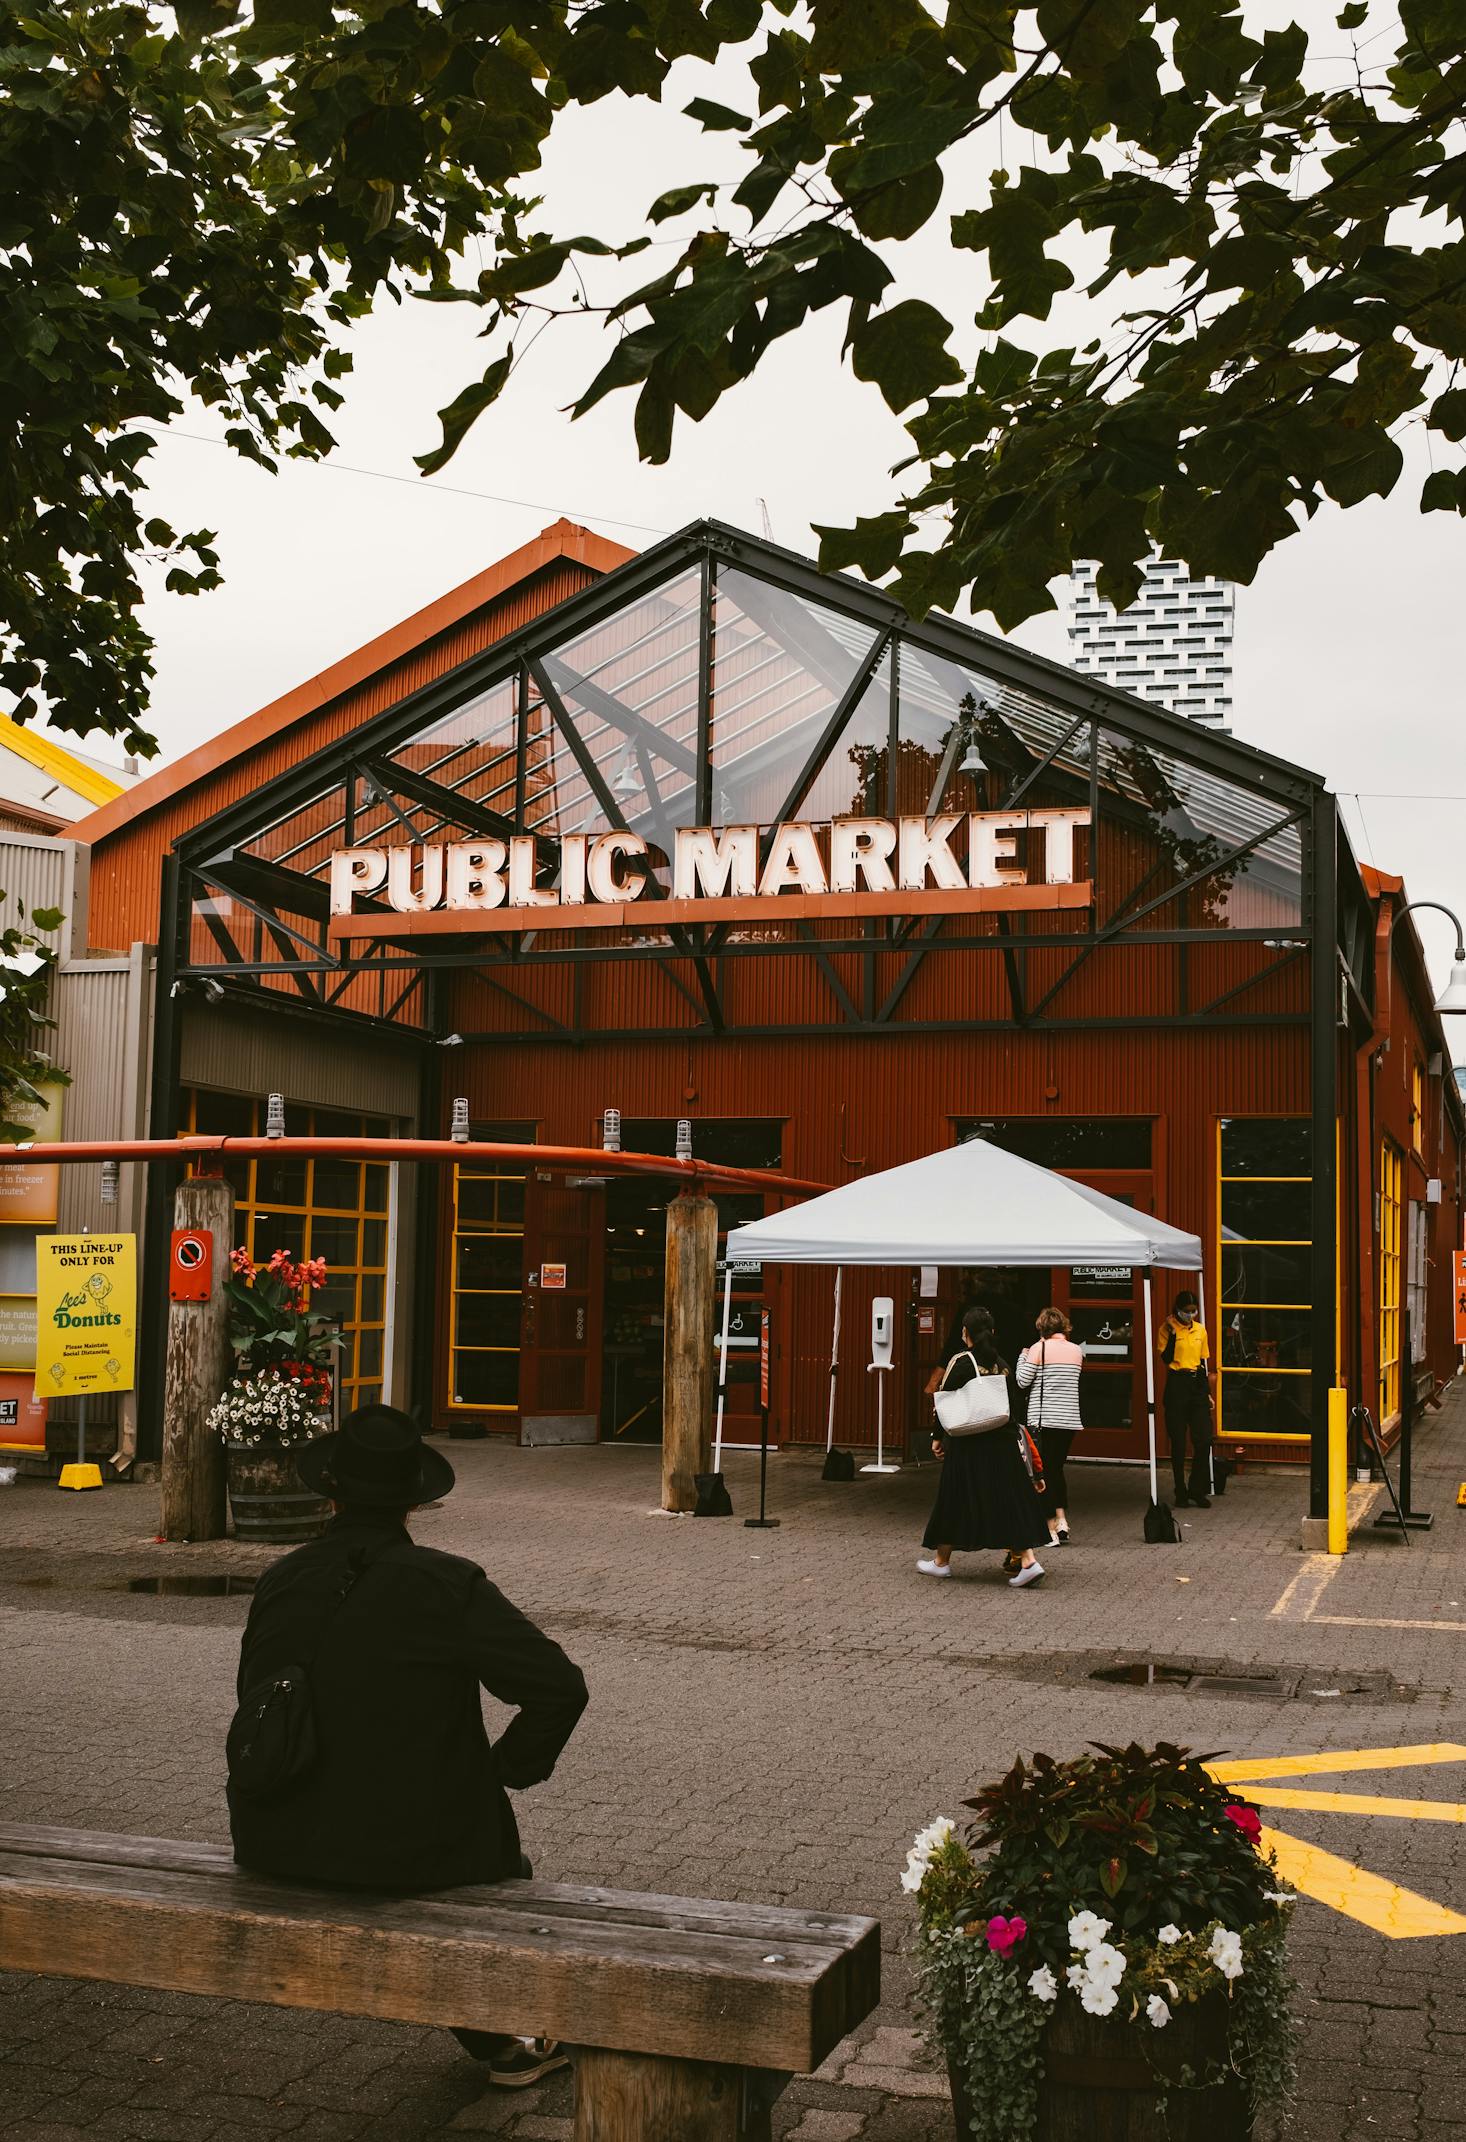 Granville Island Public Market in Vancouver